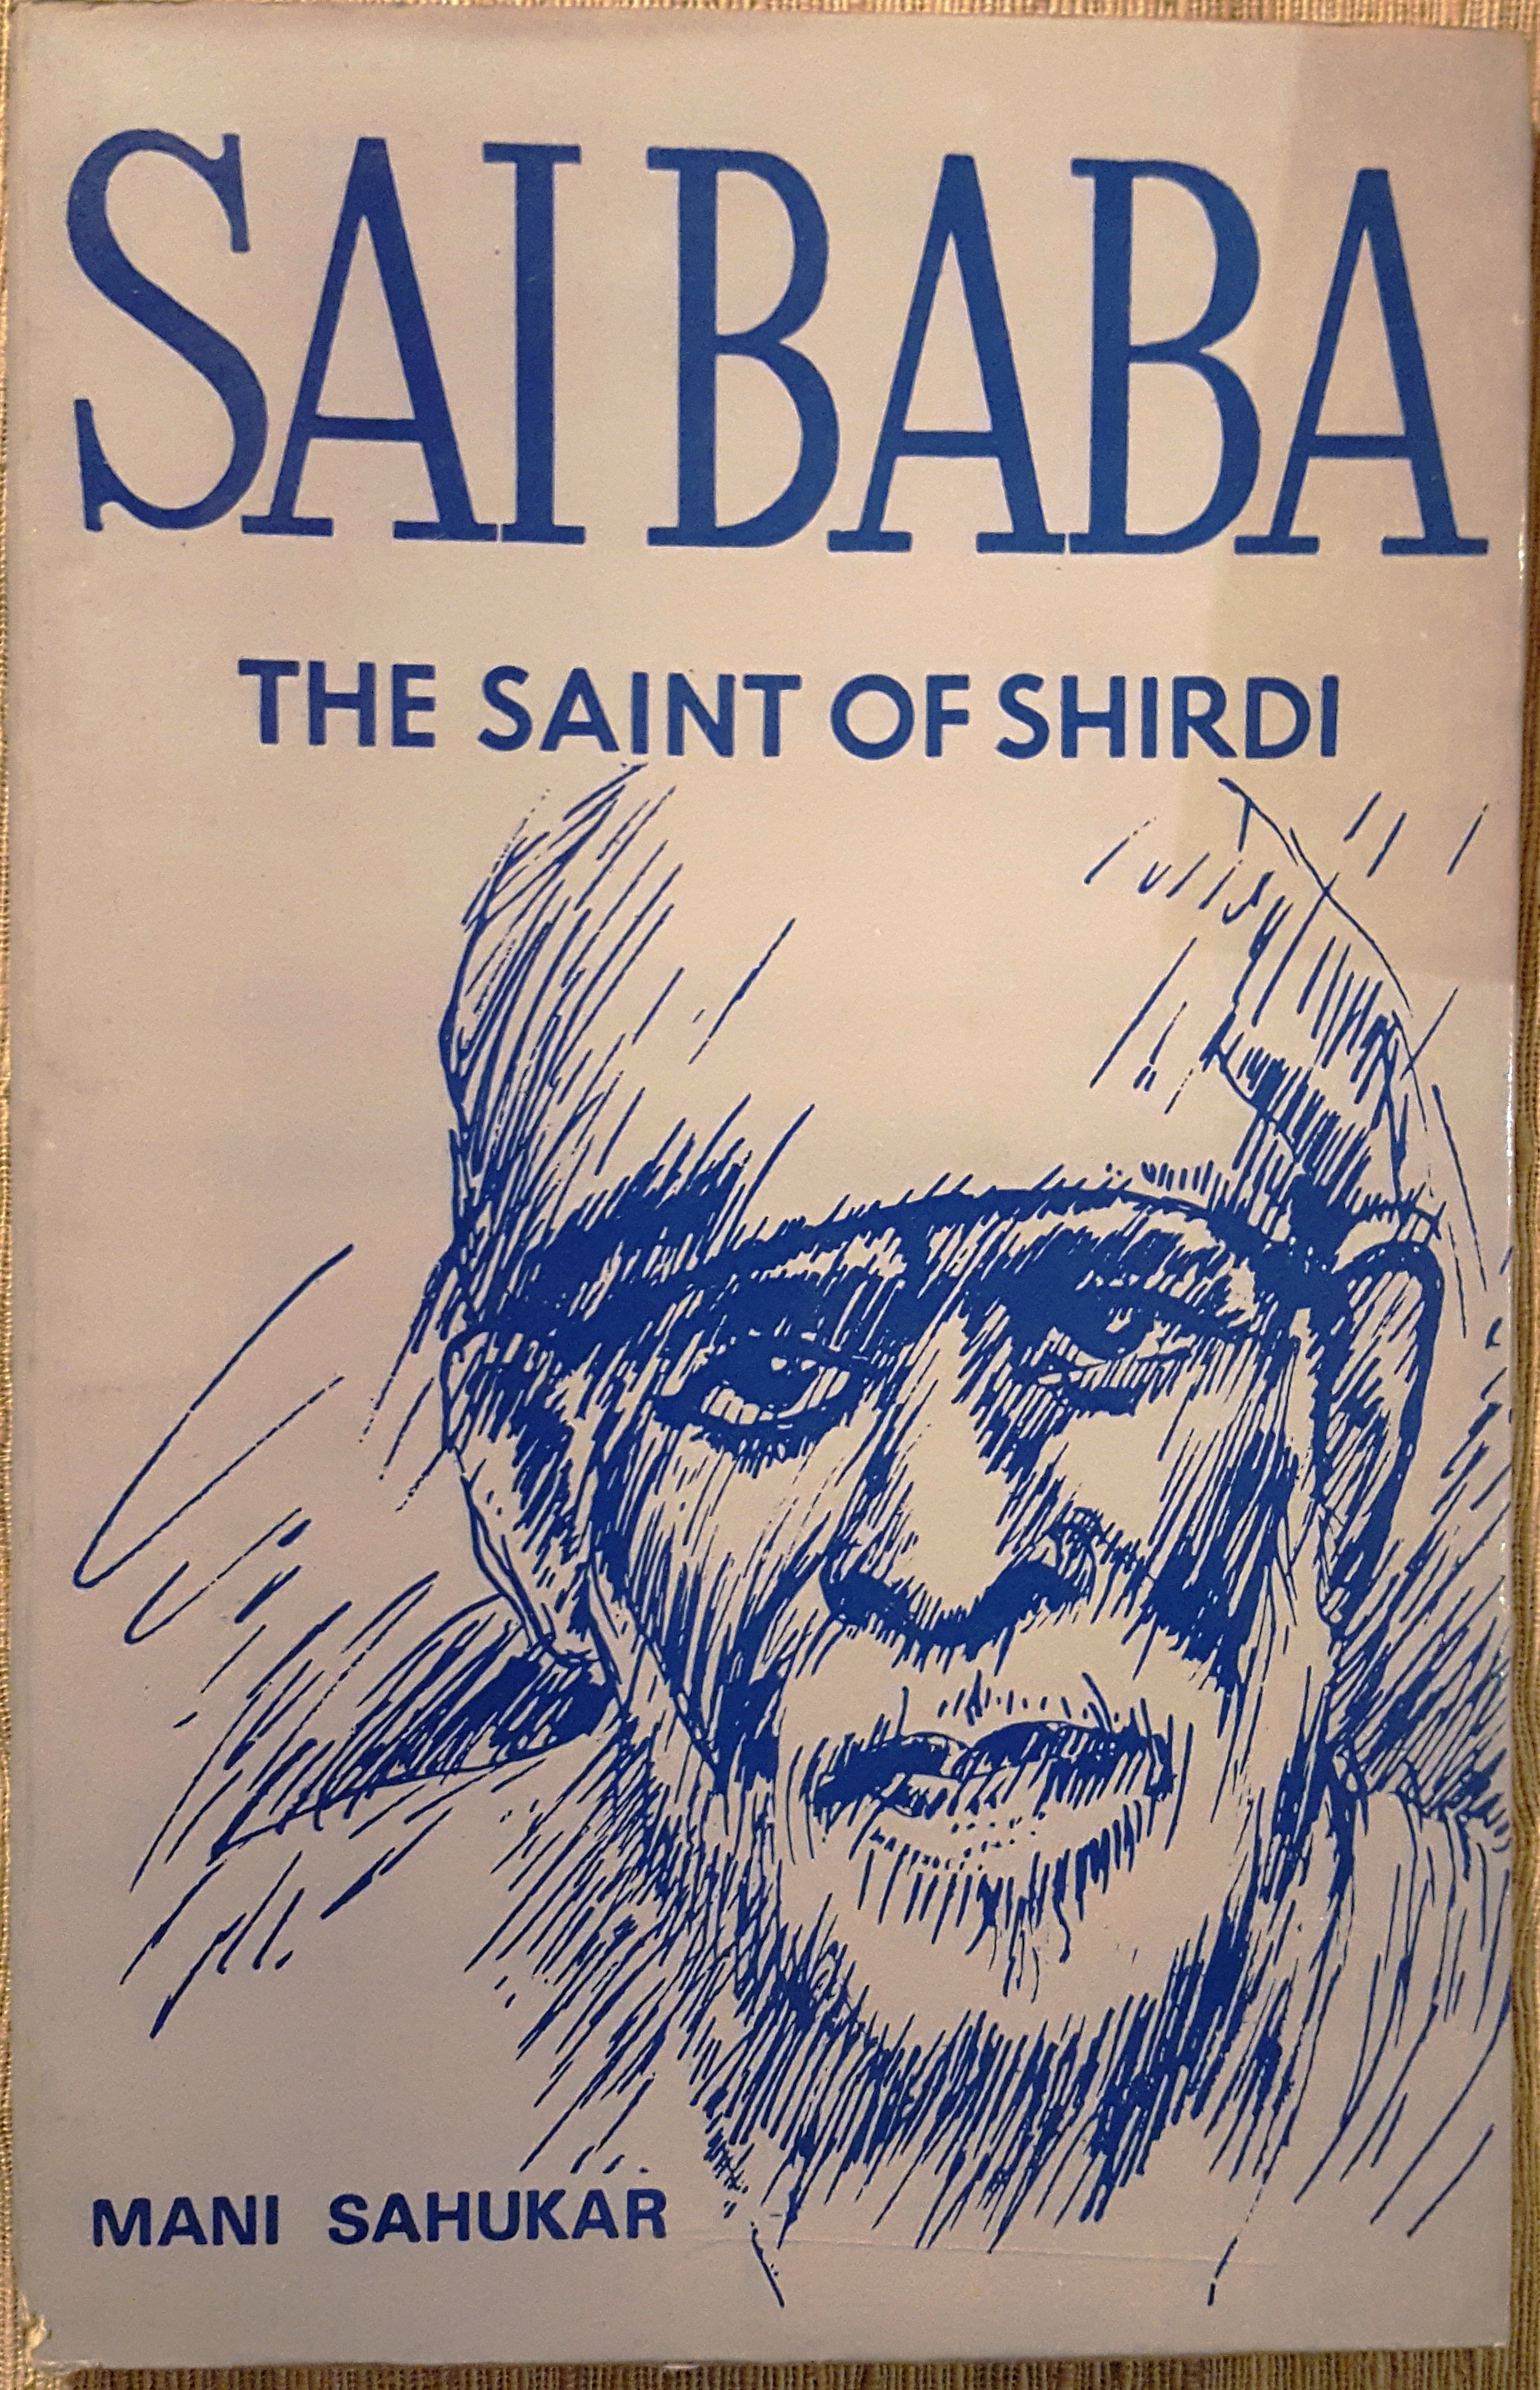 Shirdi Sai Baba Temple Frankfurt Germany (Deutschland) recommended book - Sai Baba - The saint of Shirdi .